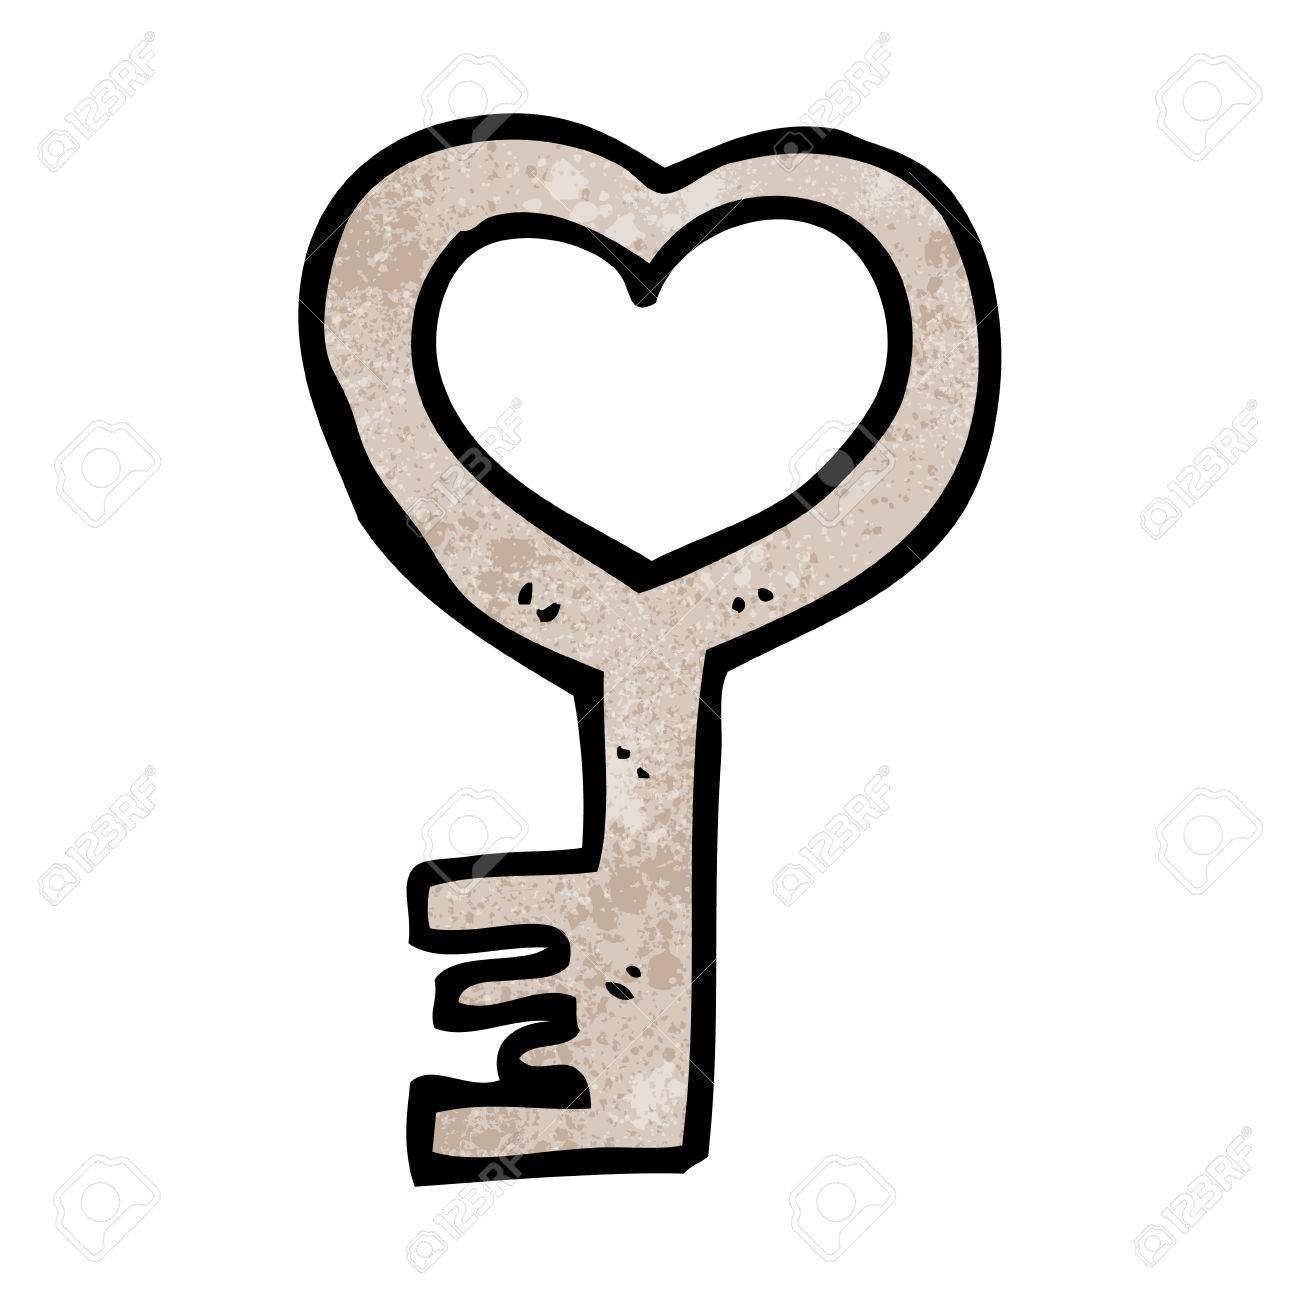 27869909-cartoon-heart-shaped-key-Stock-Vector.jpg